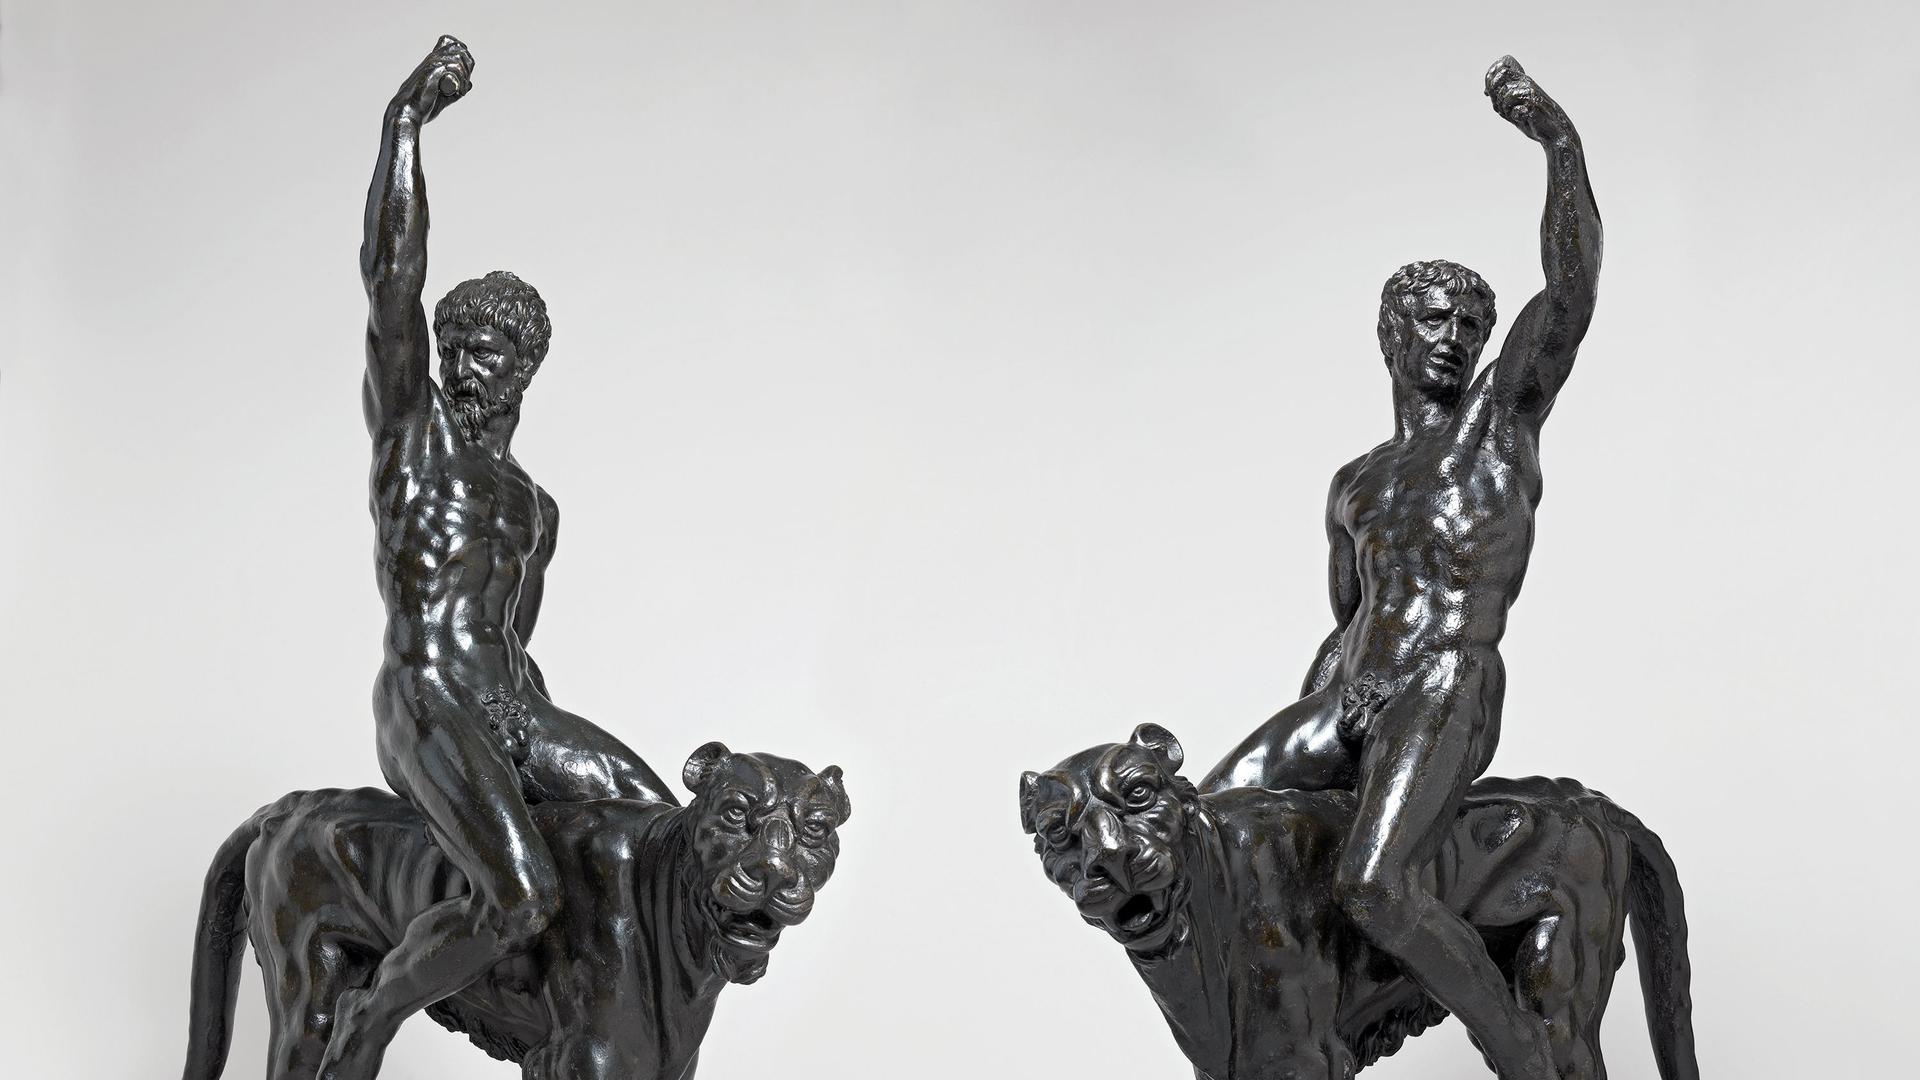 The Michelangelo bronzes 'Only surviving Michelangelo bronzes in the world' discovered, Cambridge, Britain.